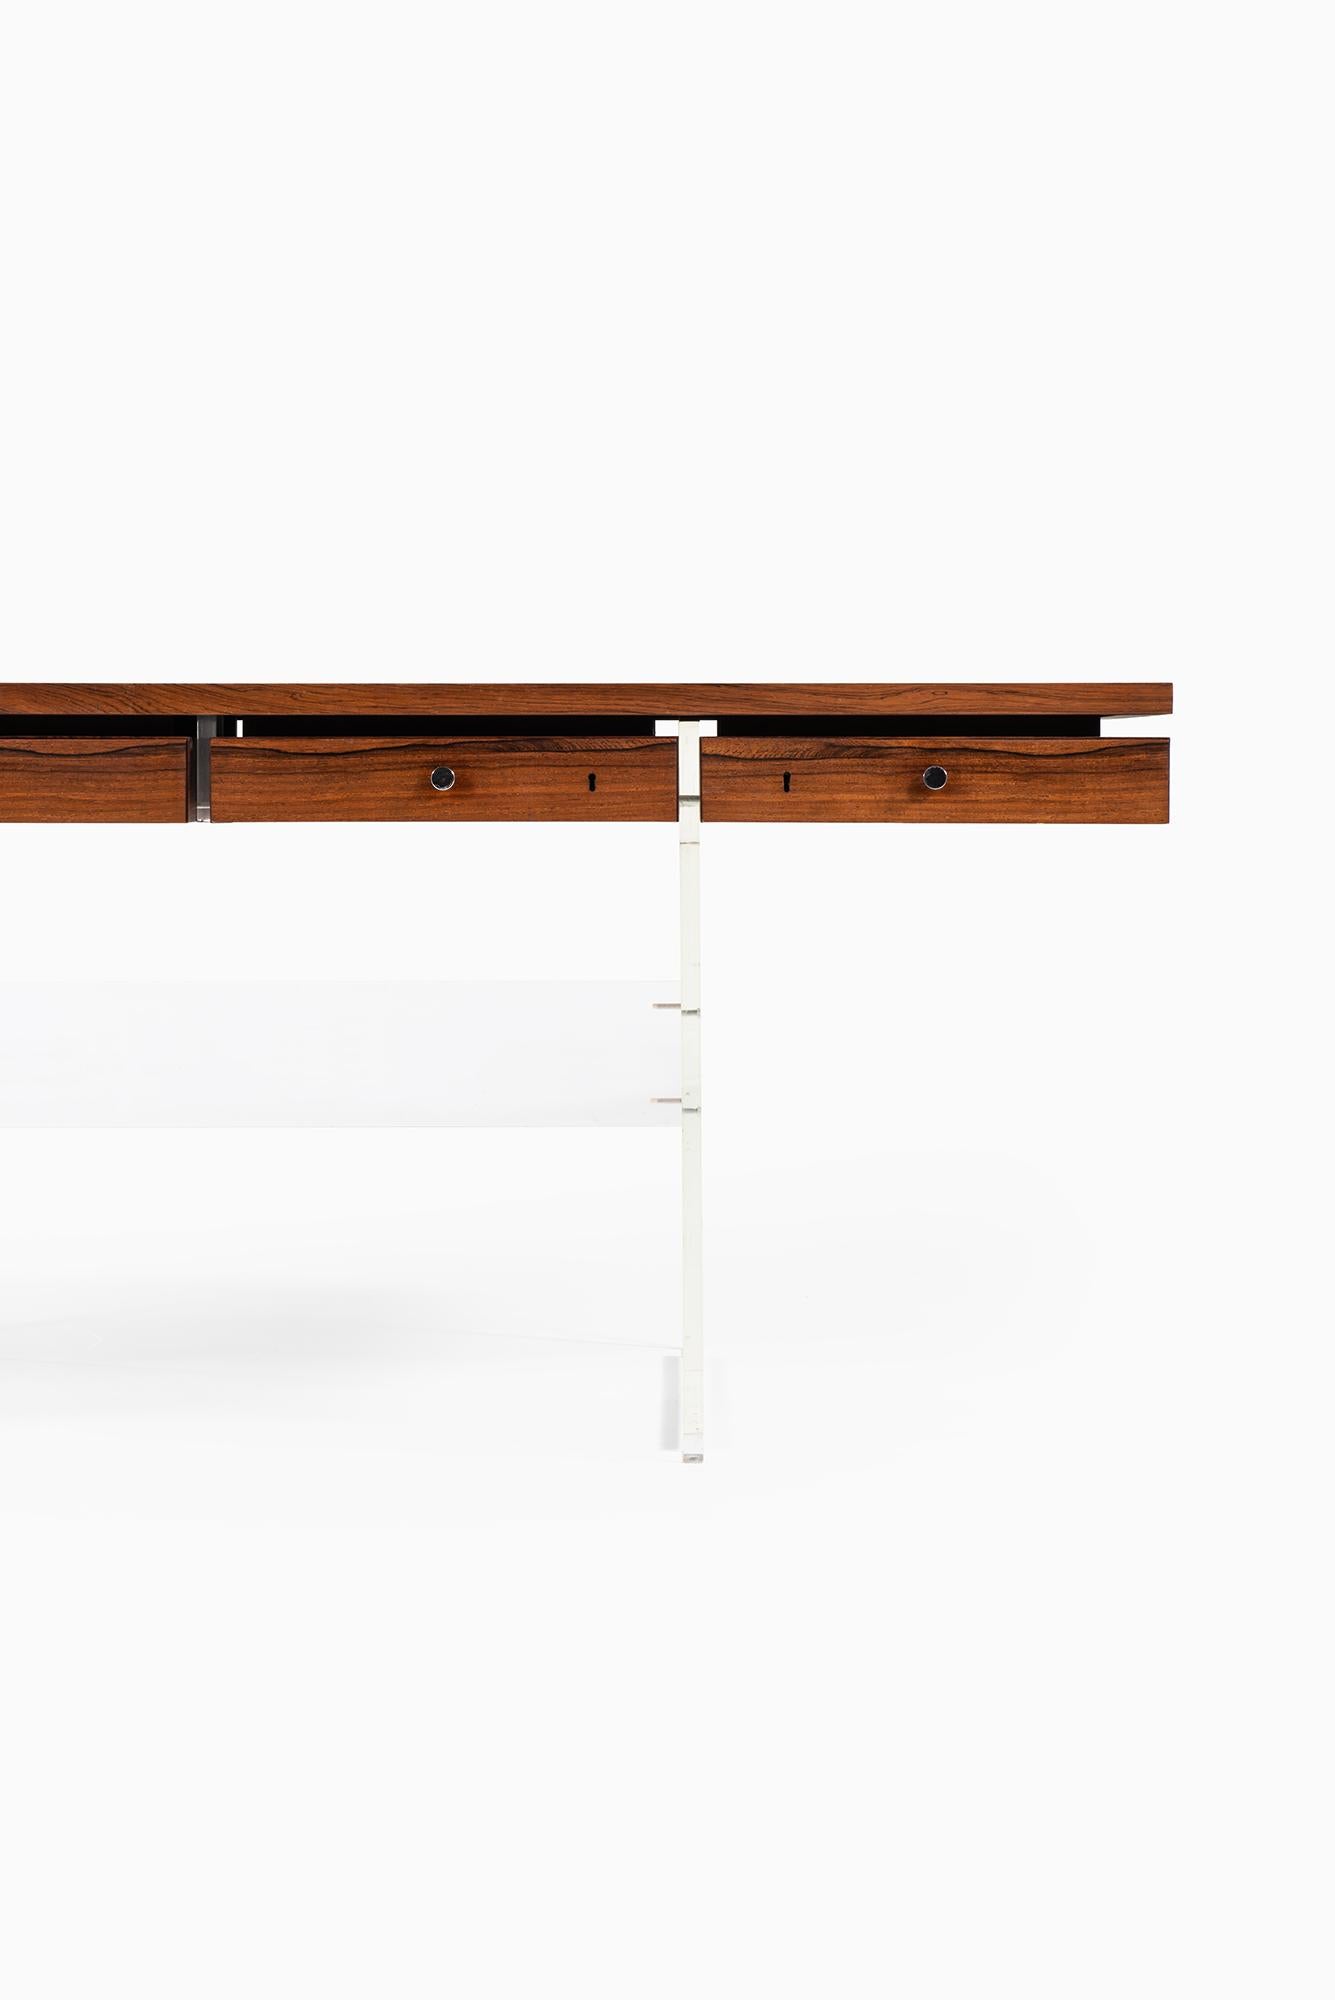 Very rare freestanding desk designed by Poul Nørreklit. Produced by Sigurd Hansens Møbelfabrik in Denmark.